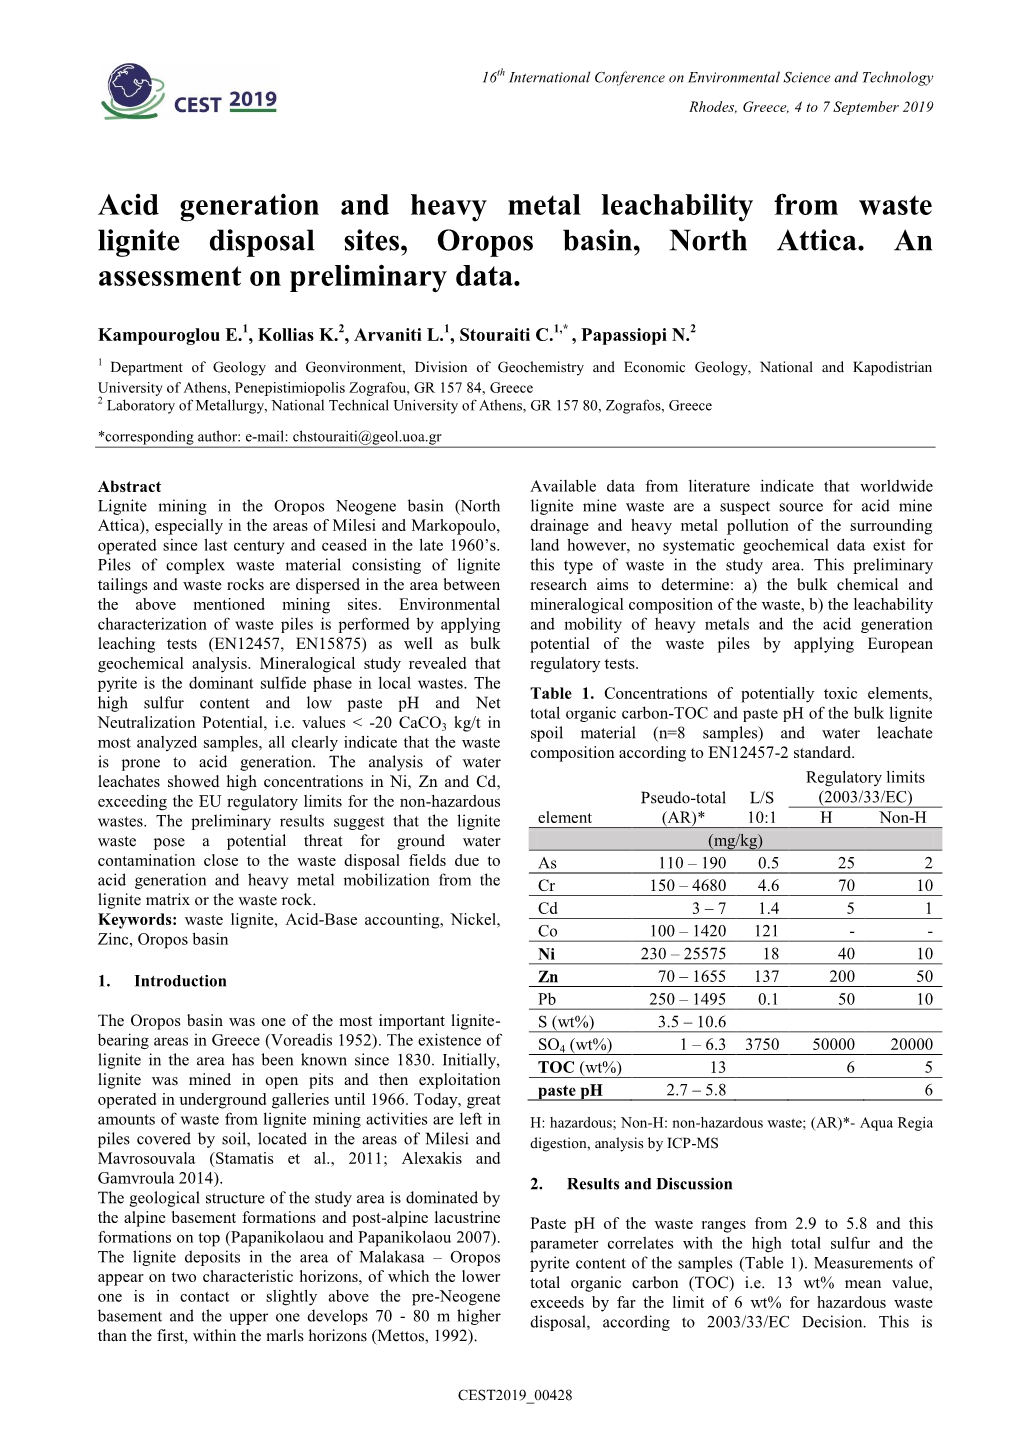 Acid Generation and Heavy Metal Leachability from Waste Lignite Disposal Sites, Oropos Basin, North Attica